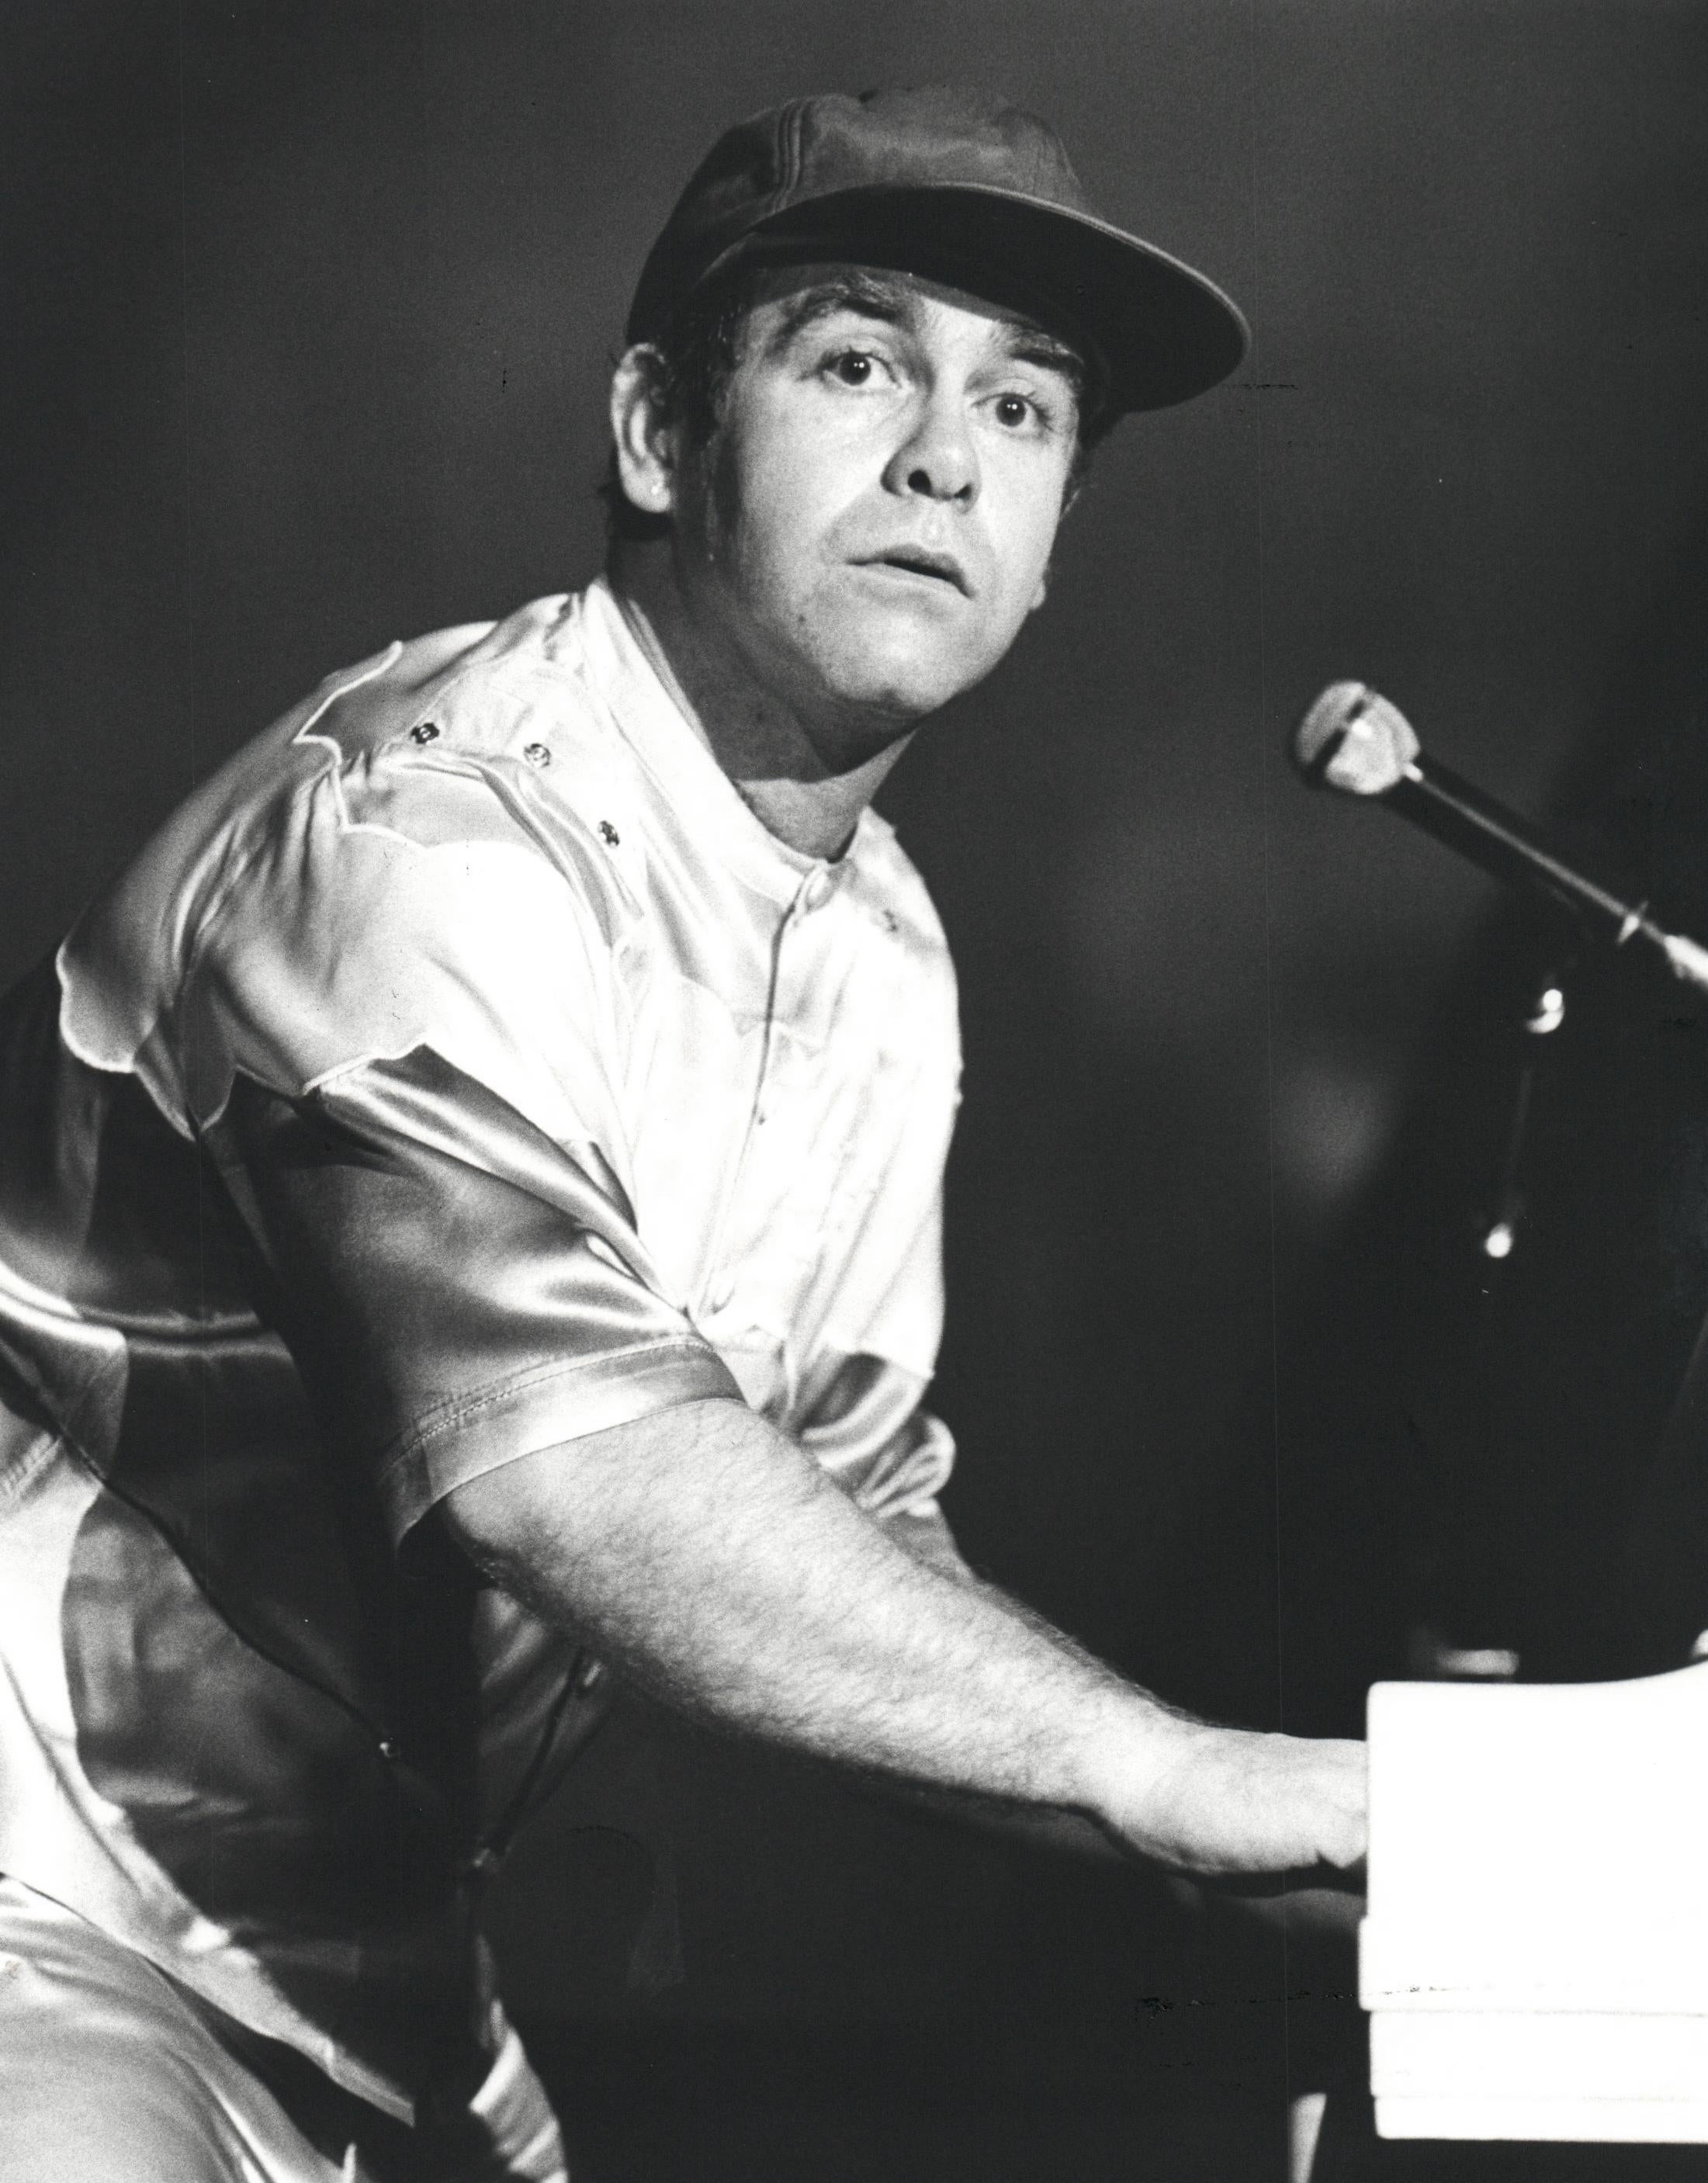 Phillip Ollerenshaw Black and White Photograph - Elton John Performing in Baseball Cap Vintage Original Photograph